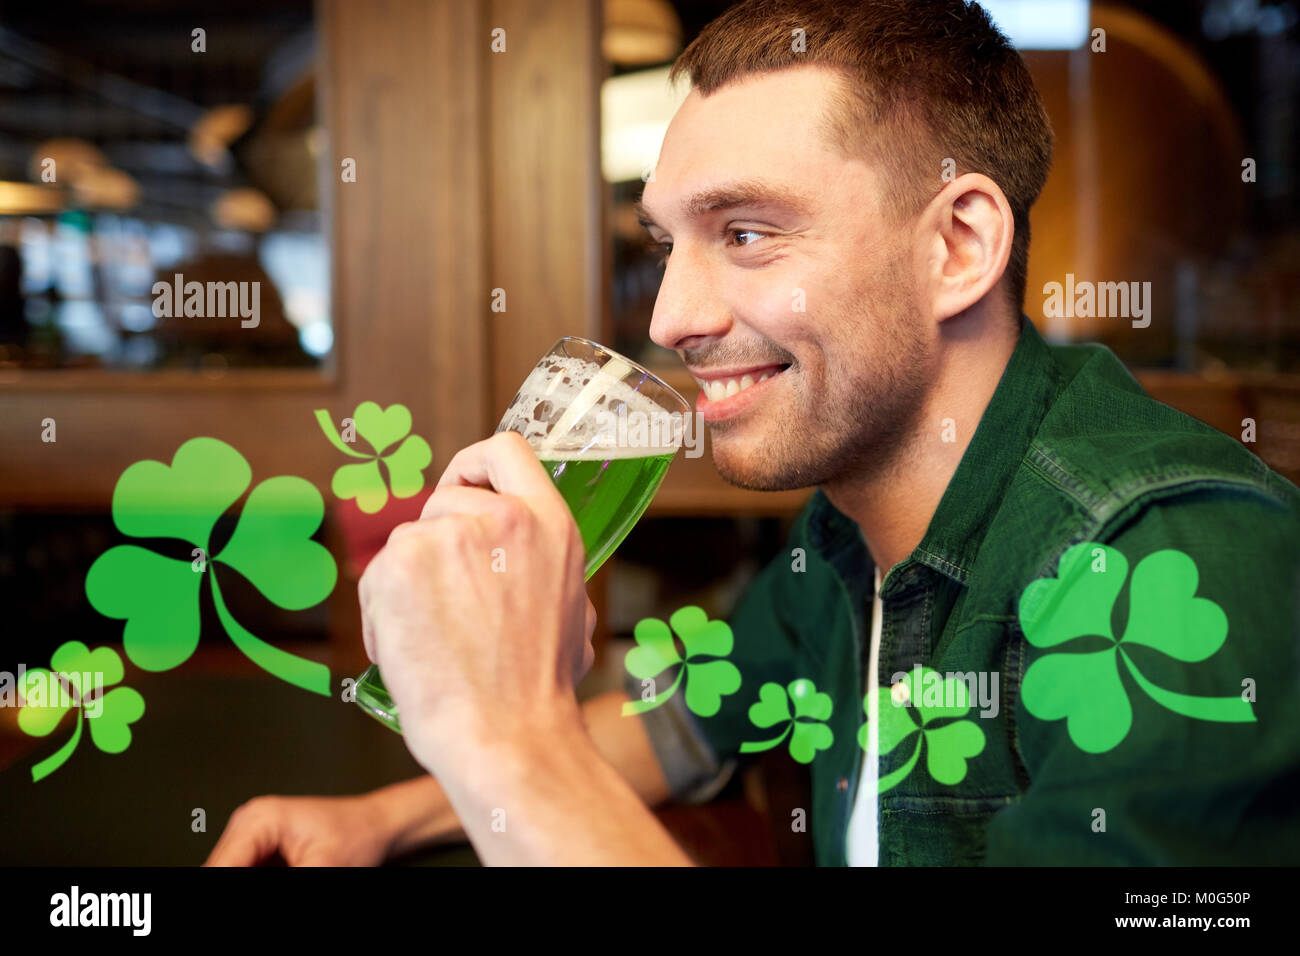 close up of man drinking green beer at bar or pub Stock Photo